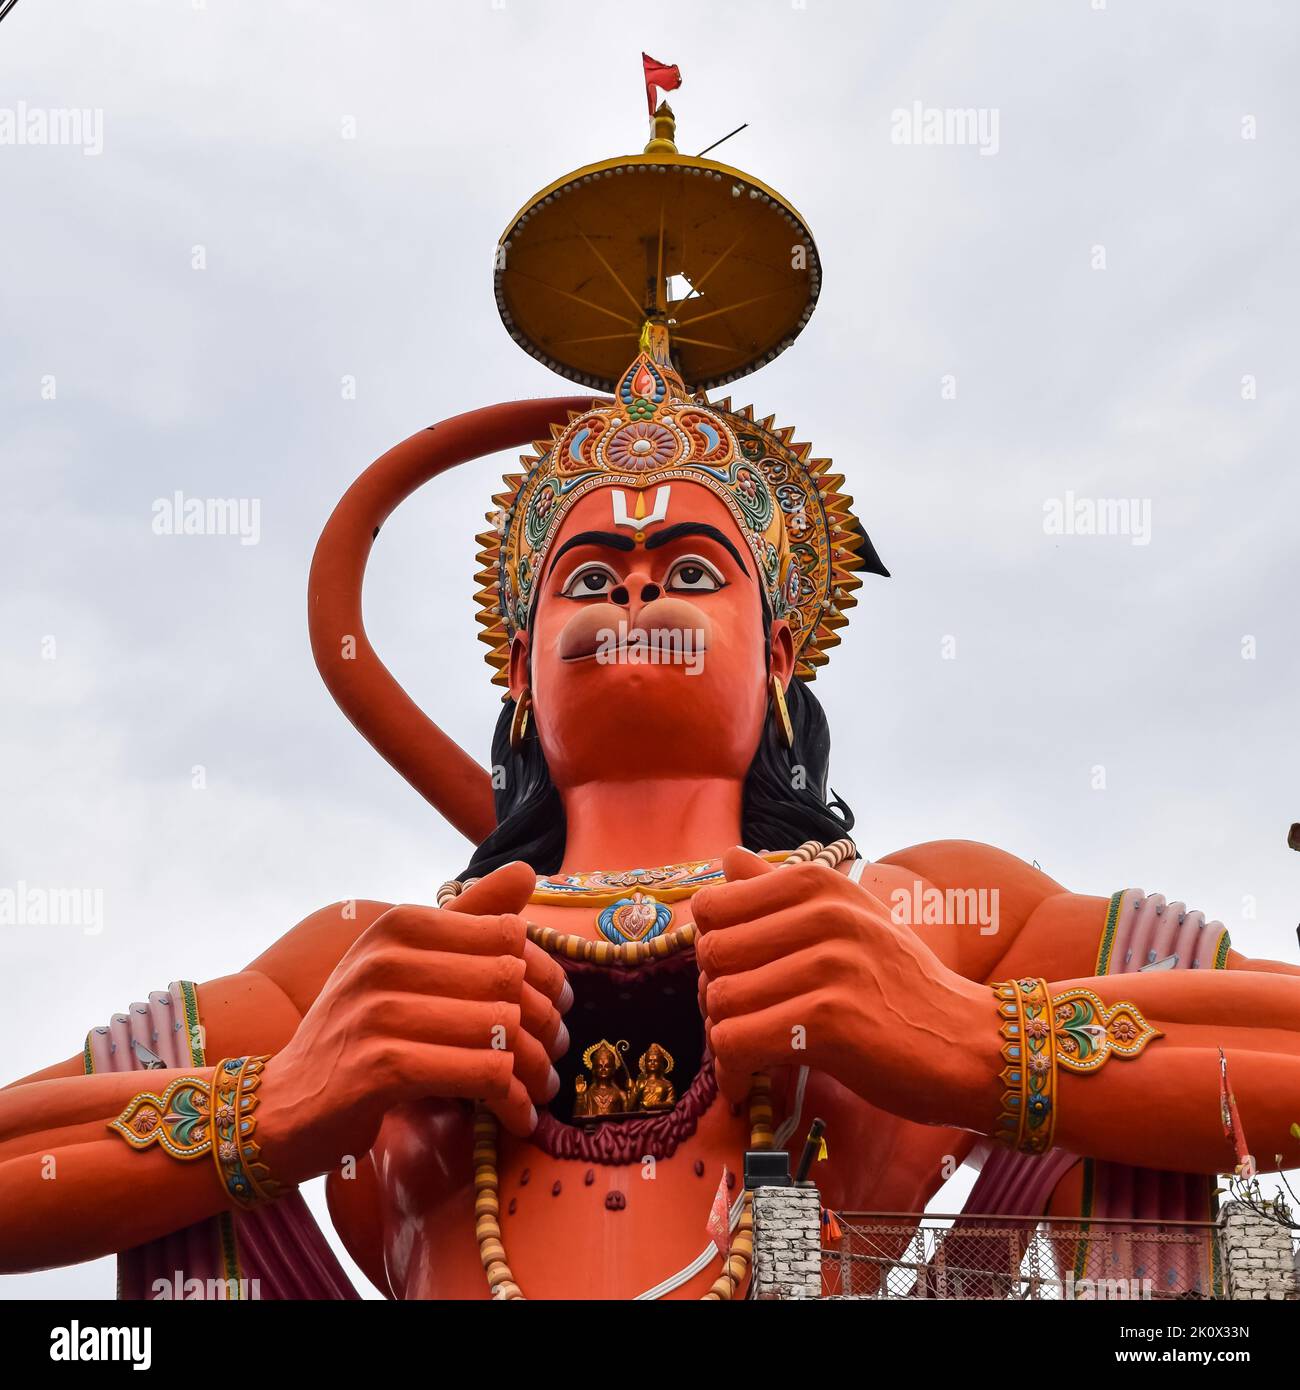 Big statue of Lord Hanuman near the delhi metro bridge situated near Karol Bagh, Delhi, India, Lord Hanuman statue touching sky Stock Photo